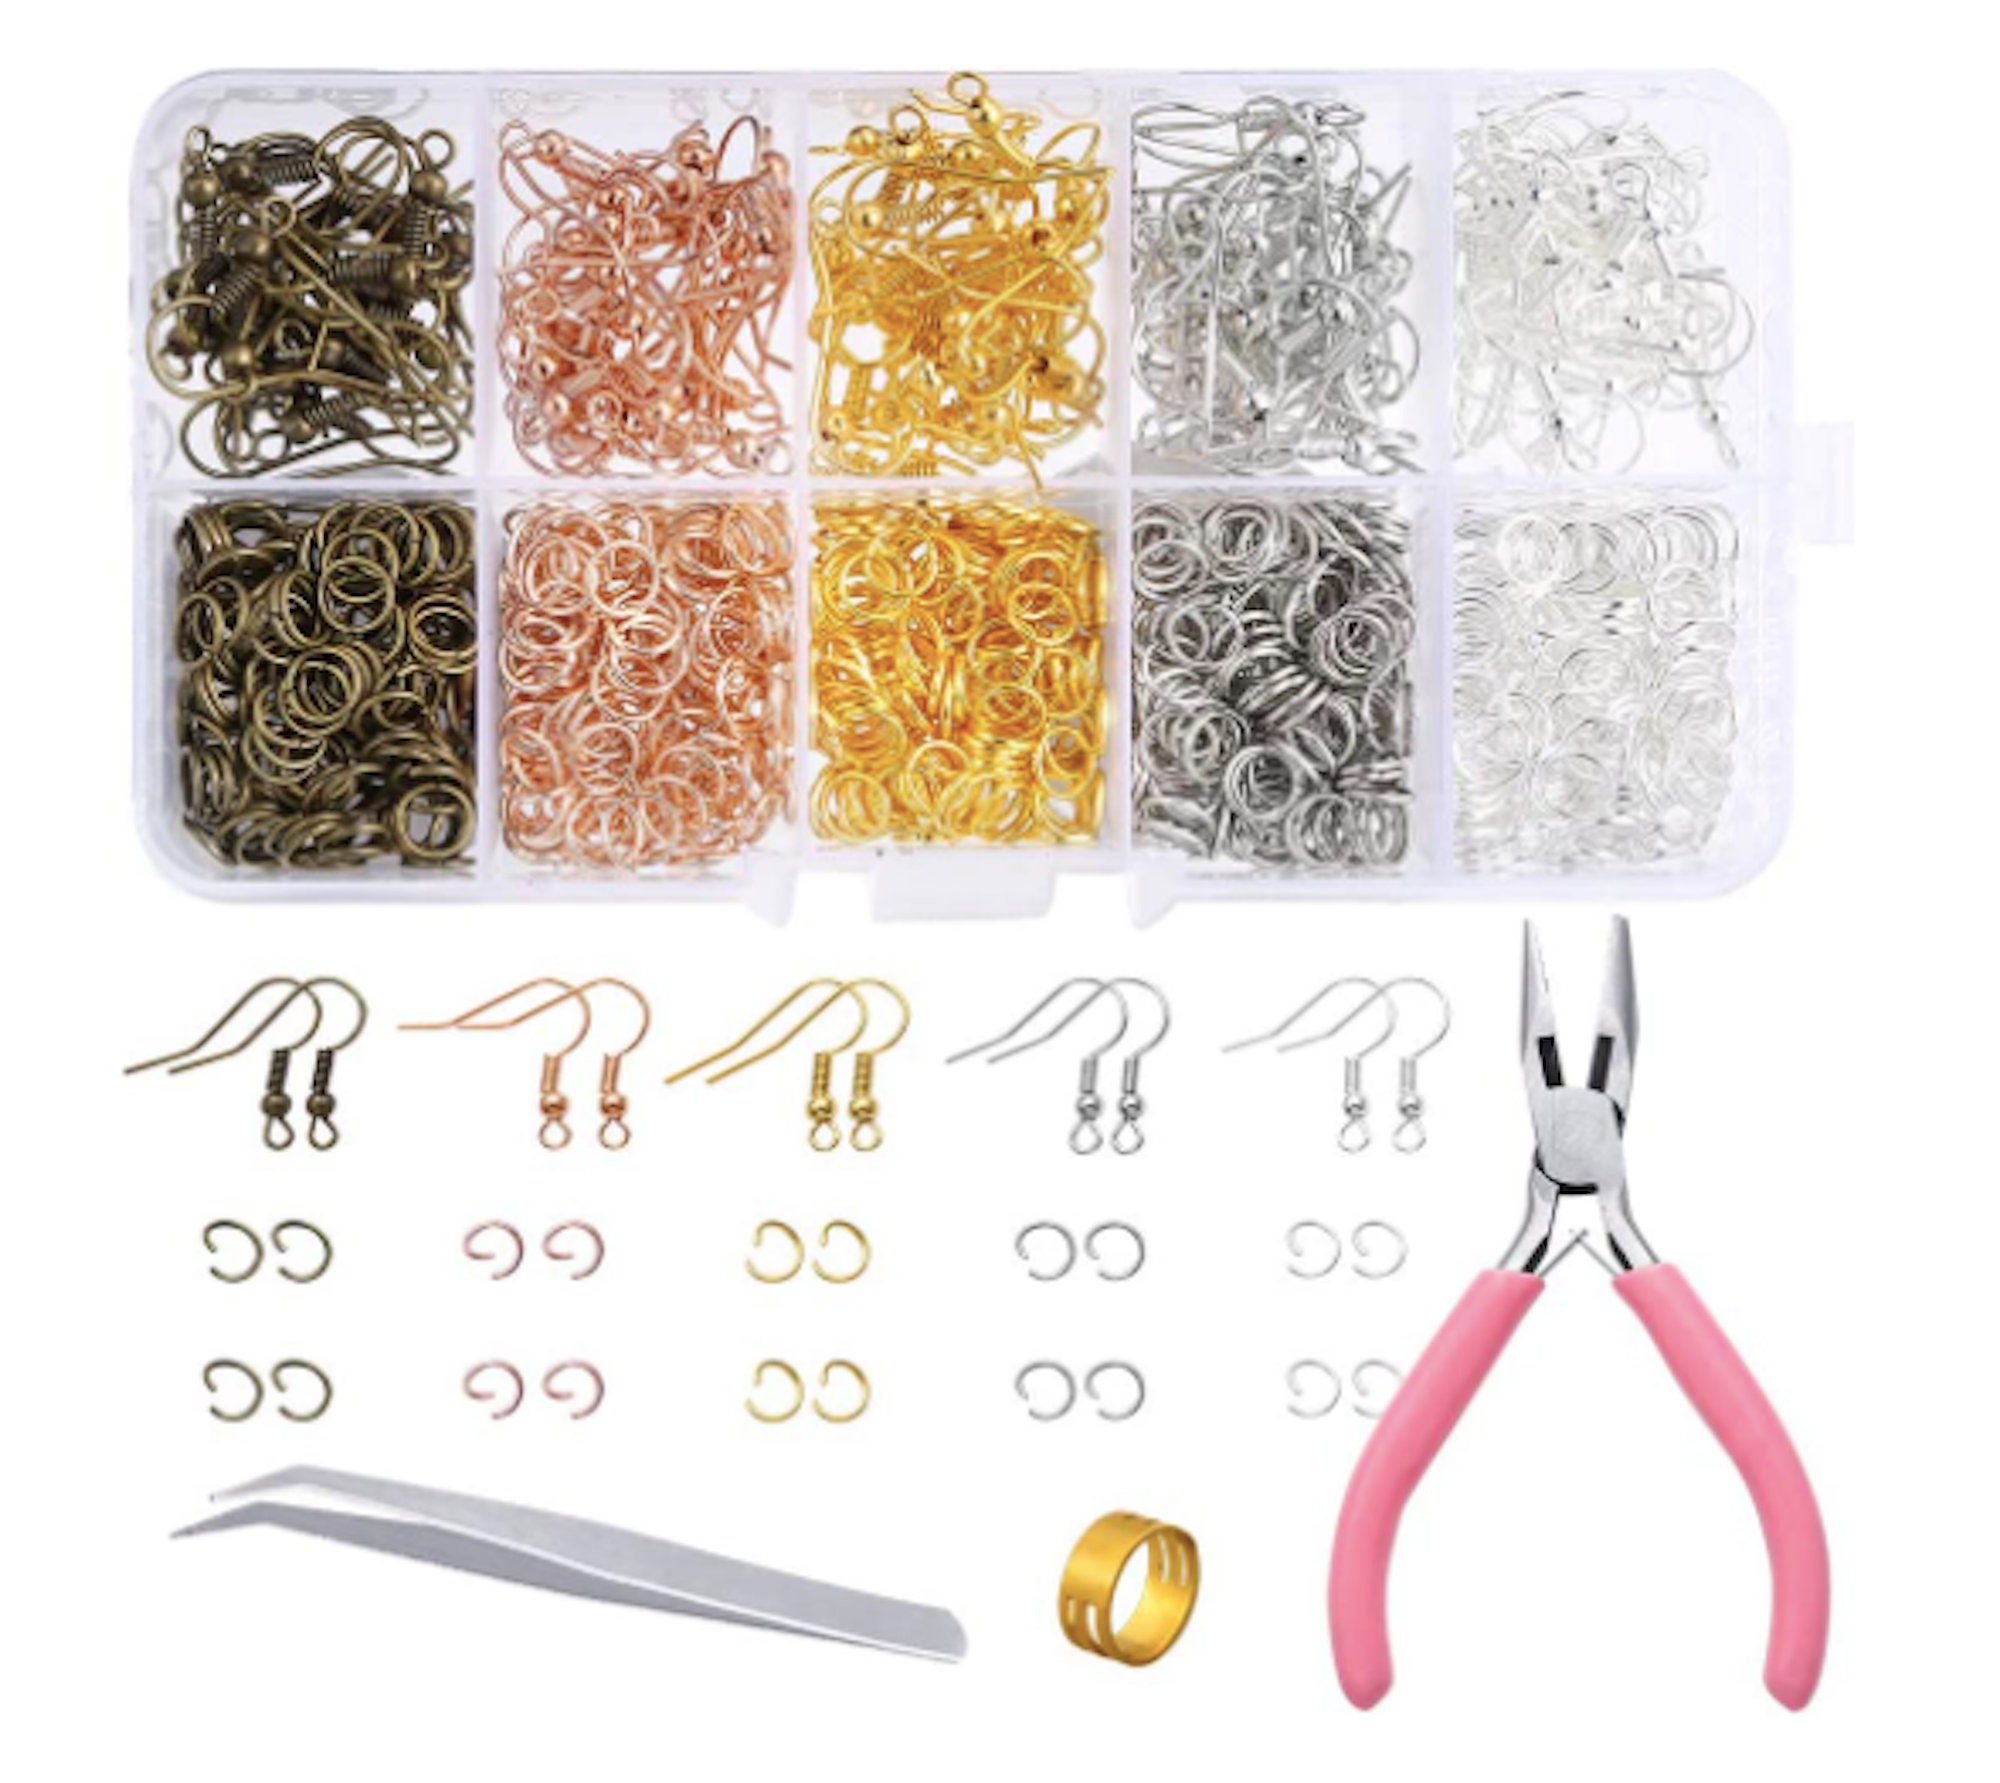 8Pcs/set Jewelry making Tools Set Organizer With Tweezers Plier